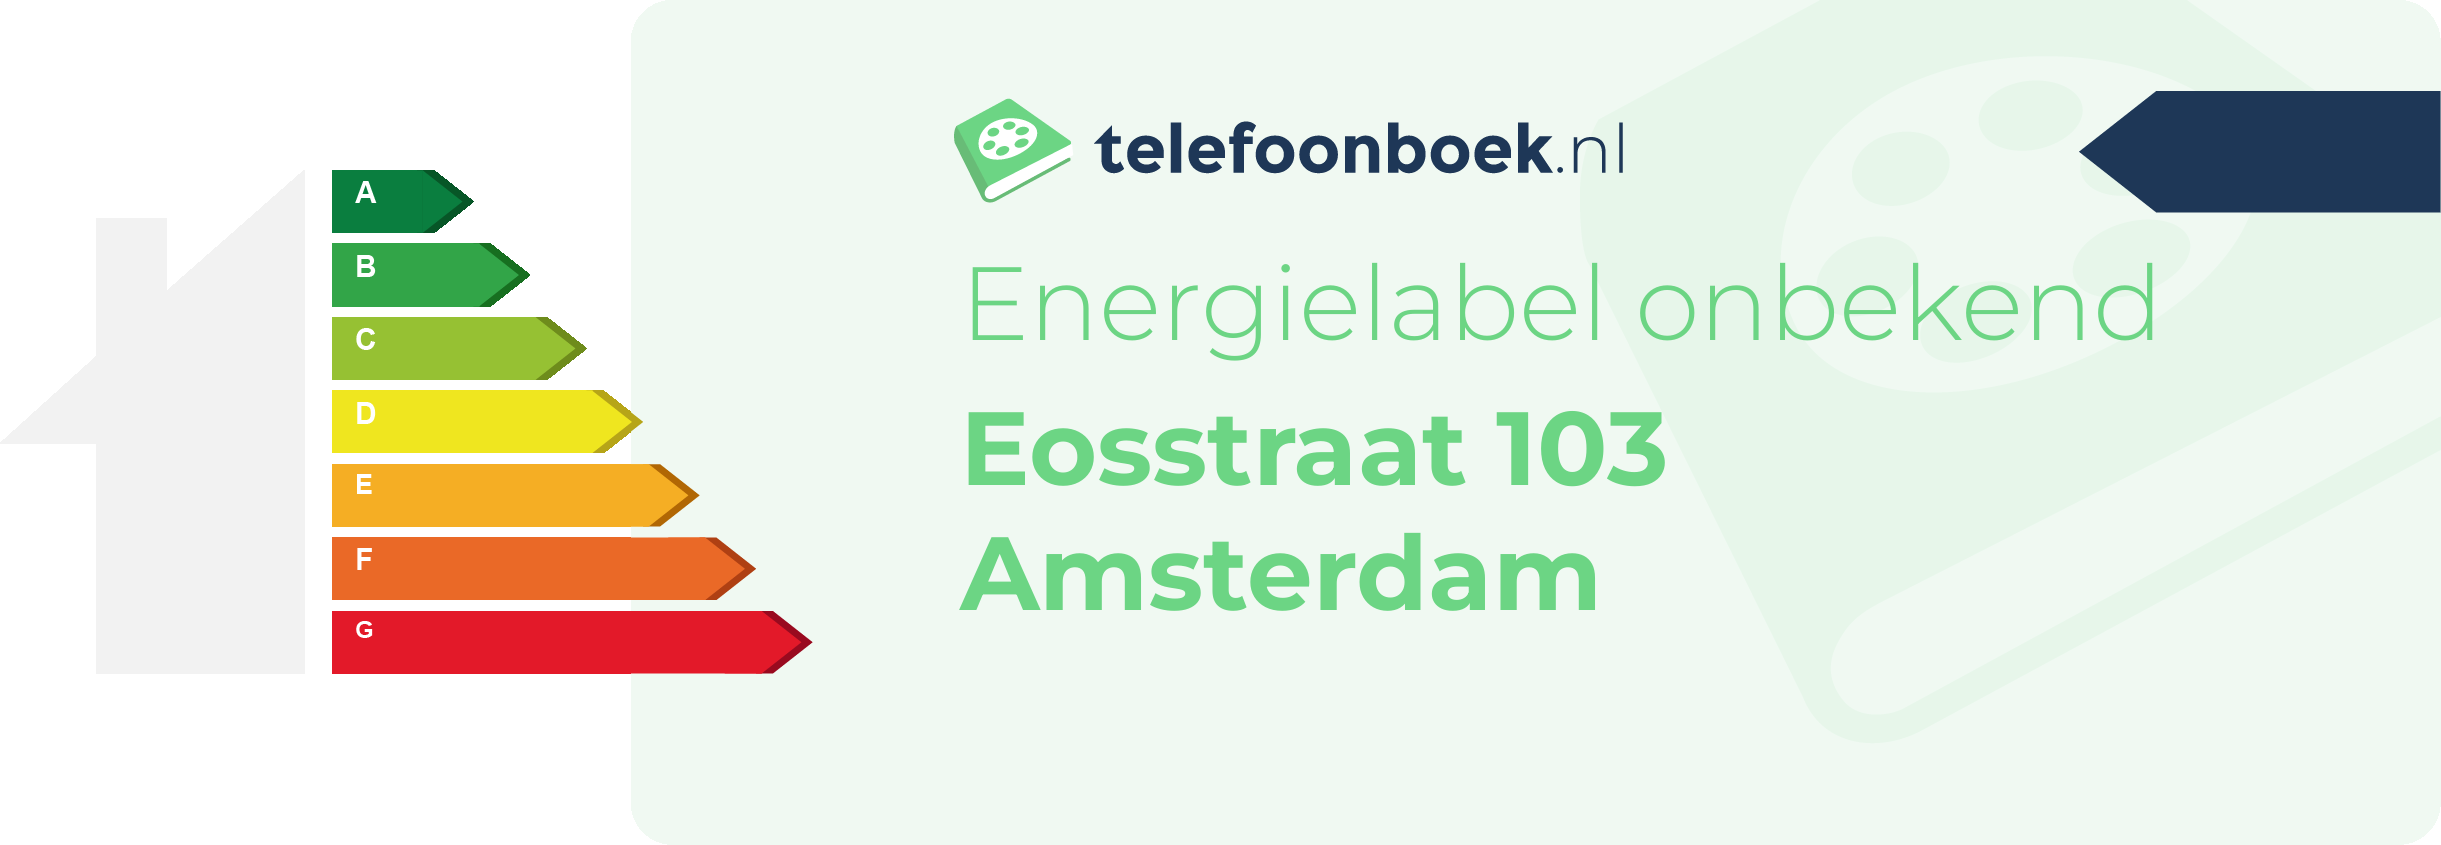 Energielabel Eosstraat 103 Amsterdam